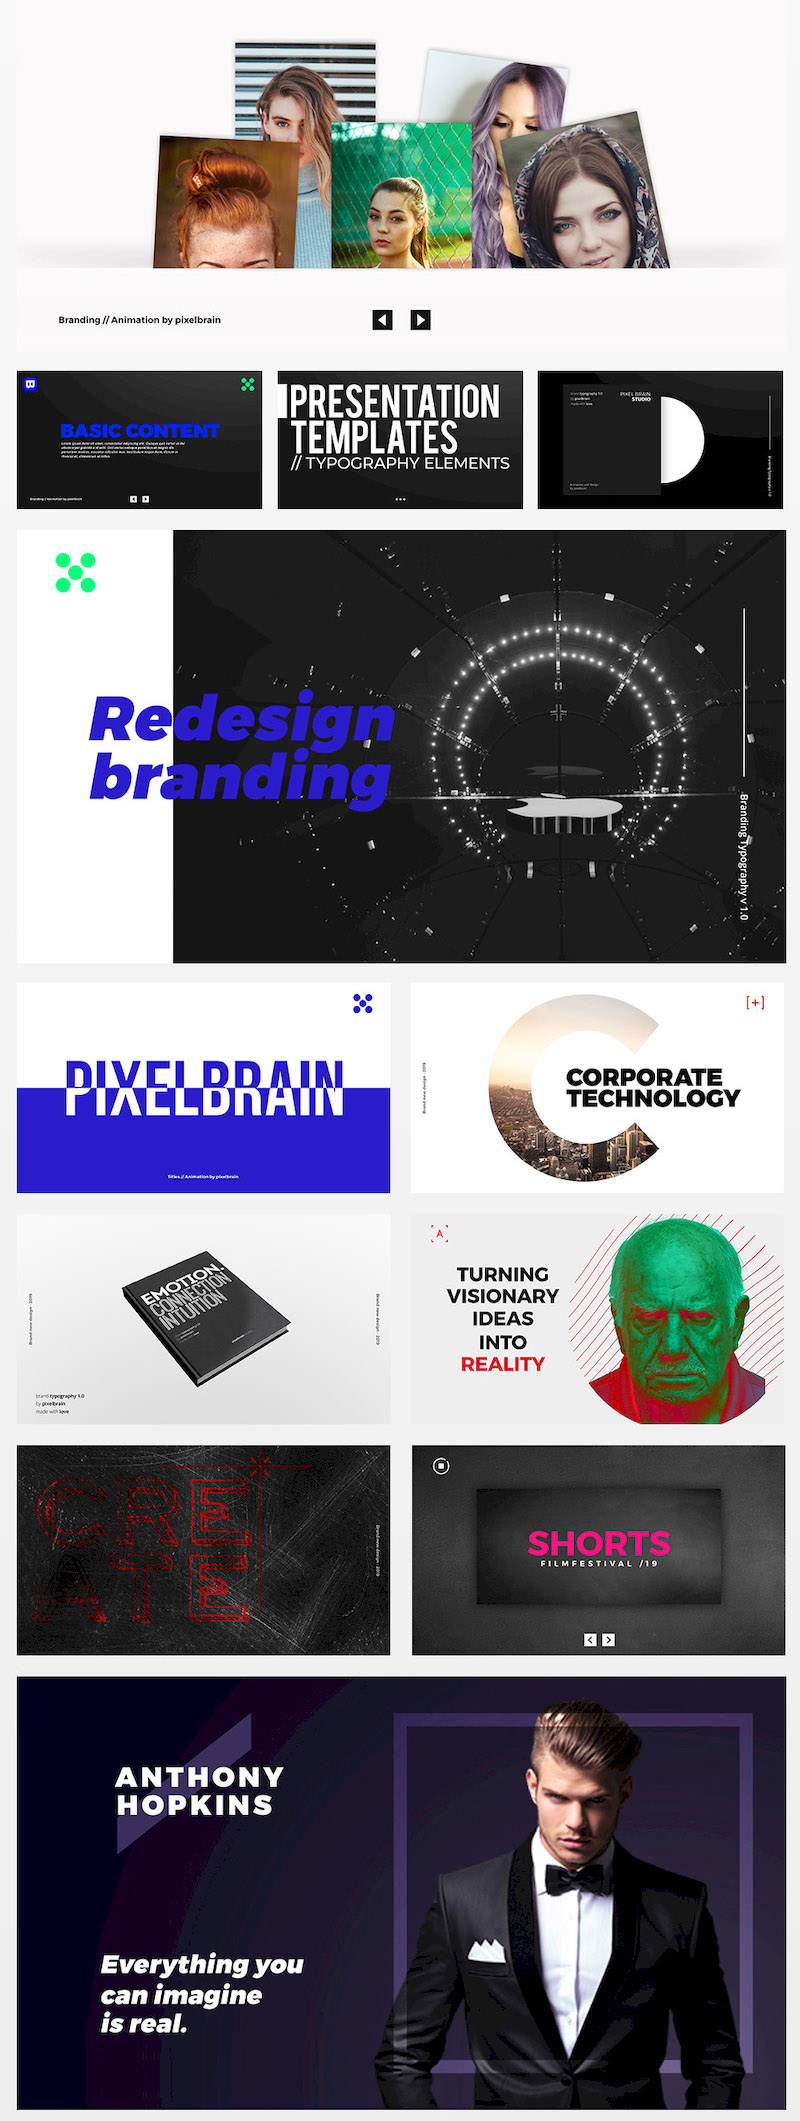  Brand-Typography 2.jpg